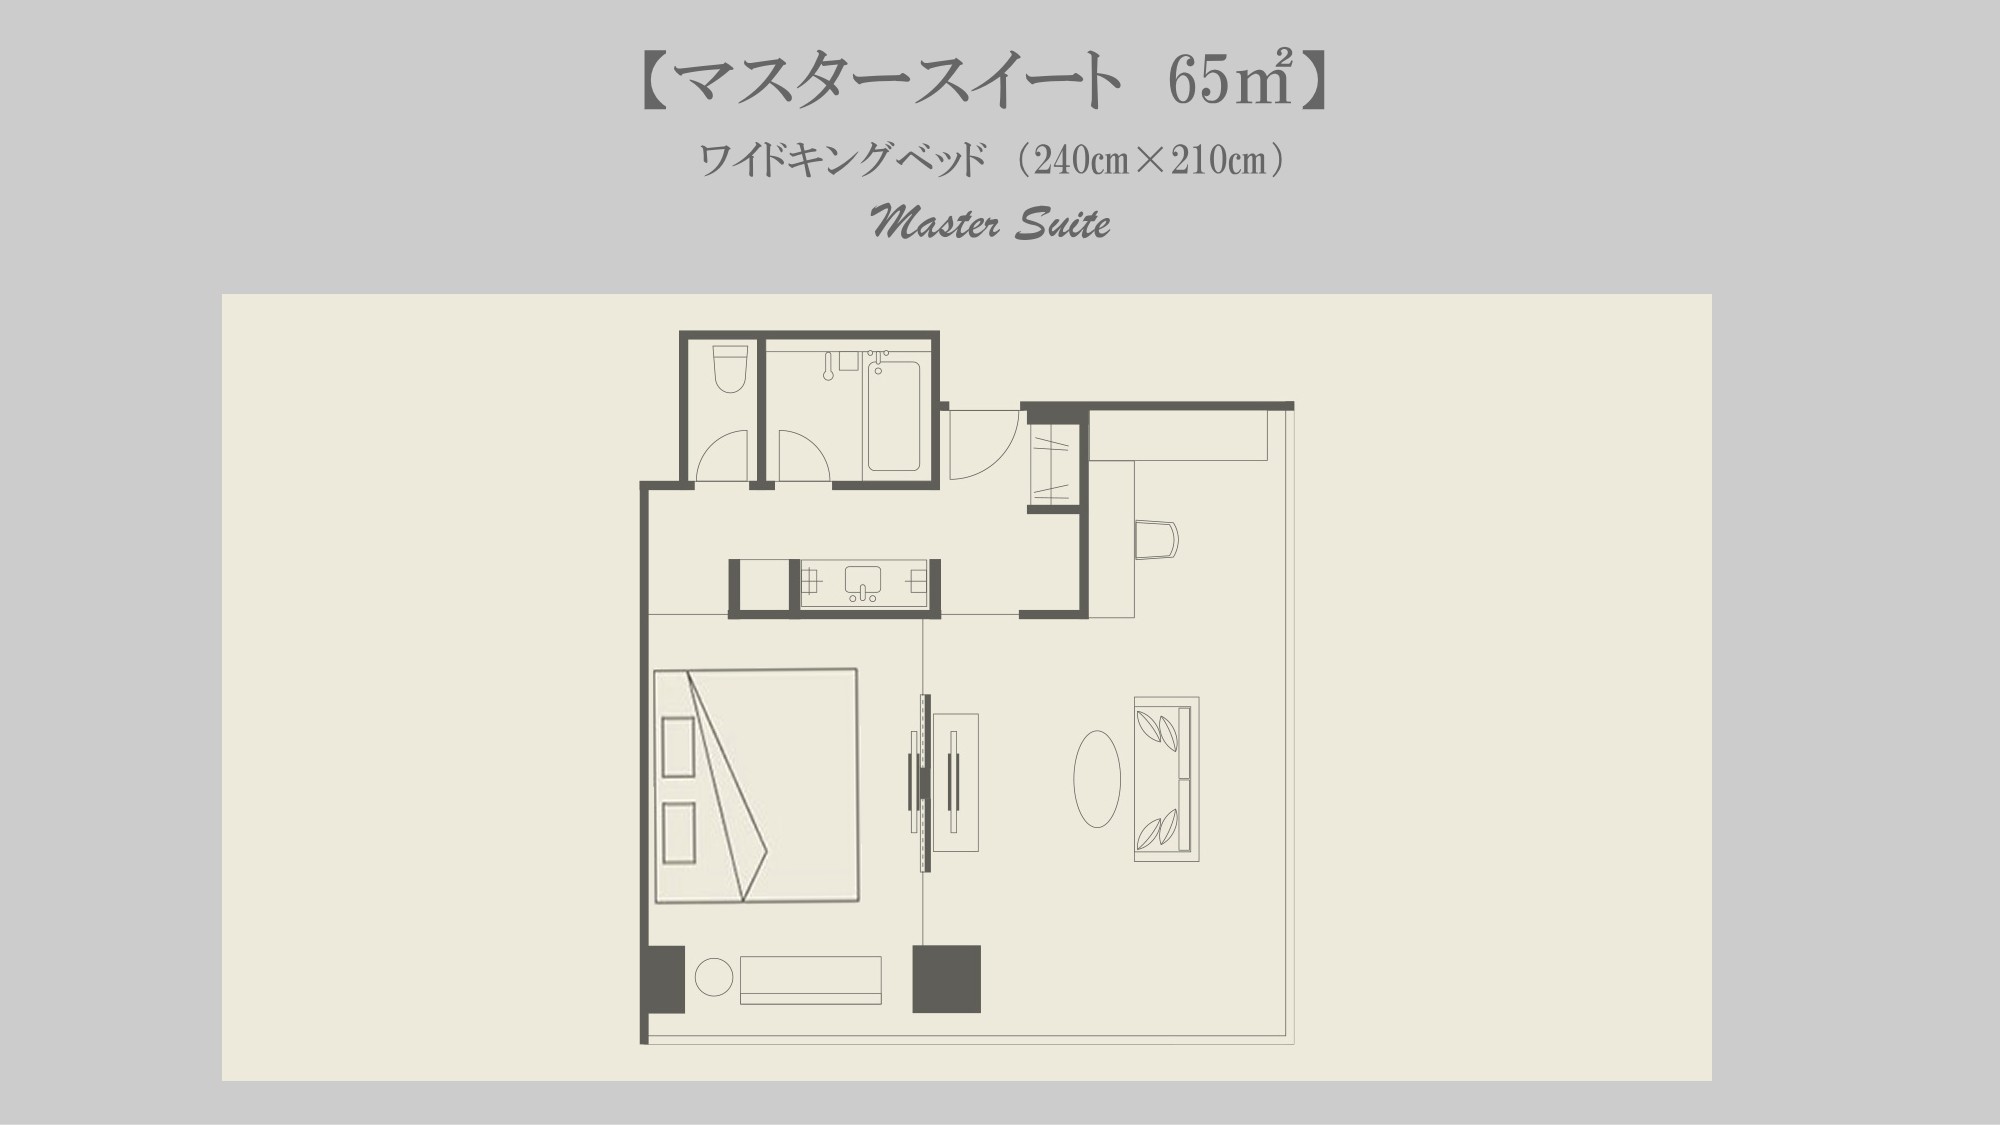 Master Suite Double｜65-67平米｜ワイドキングベッド1台240×;210センチ